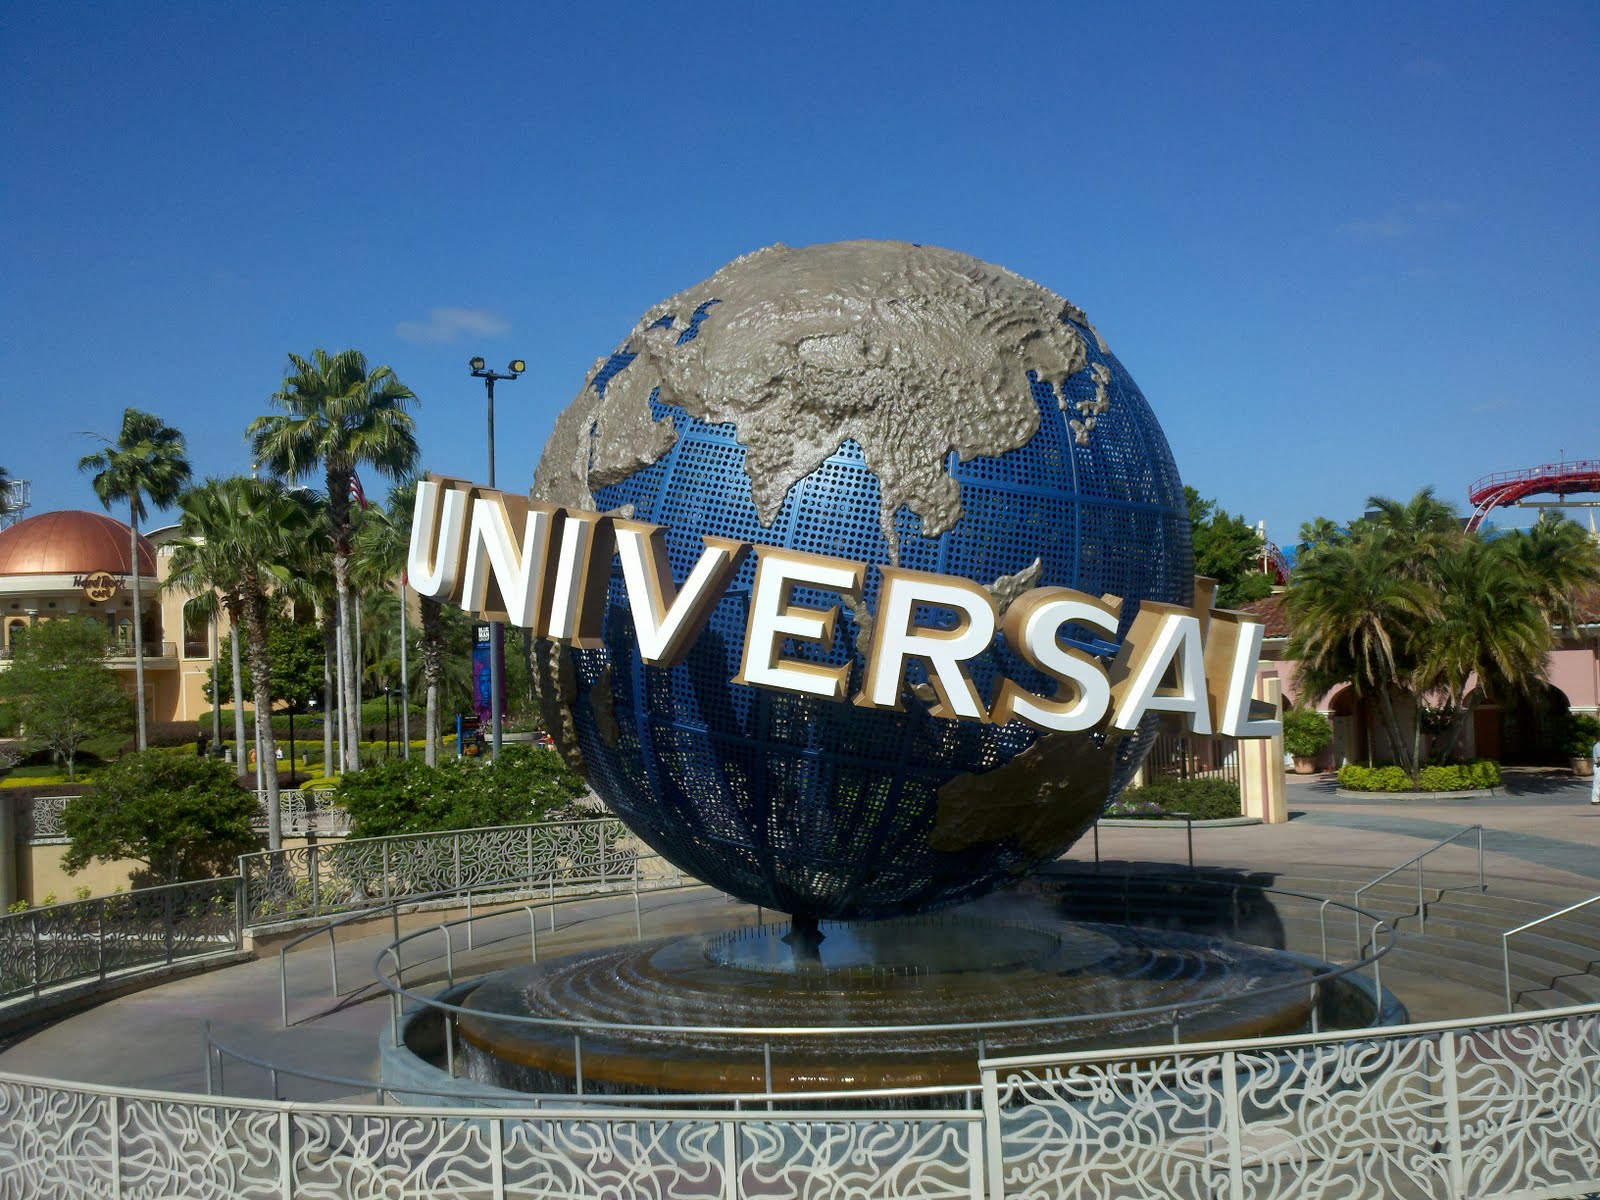 Park Impressions: Impression: Universal Studios Florida